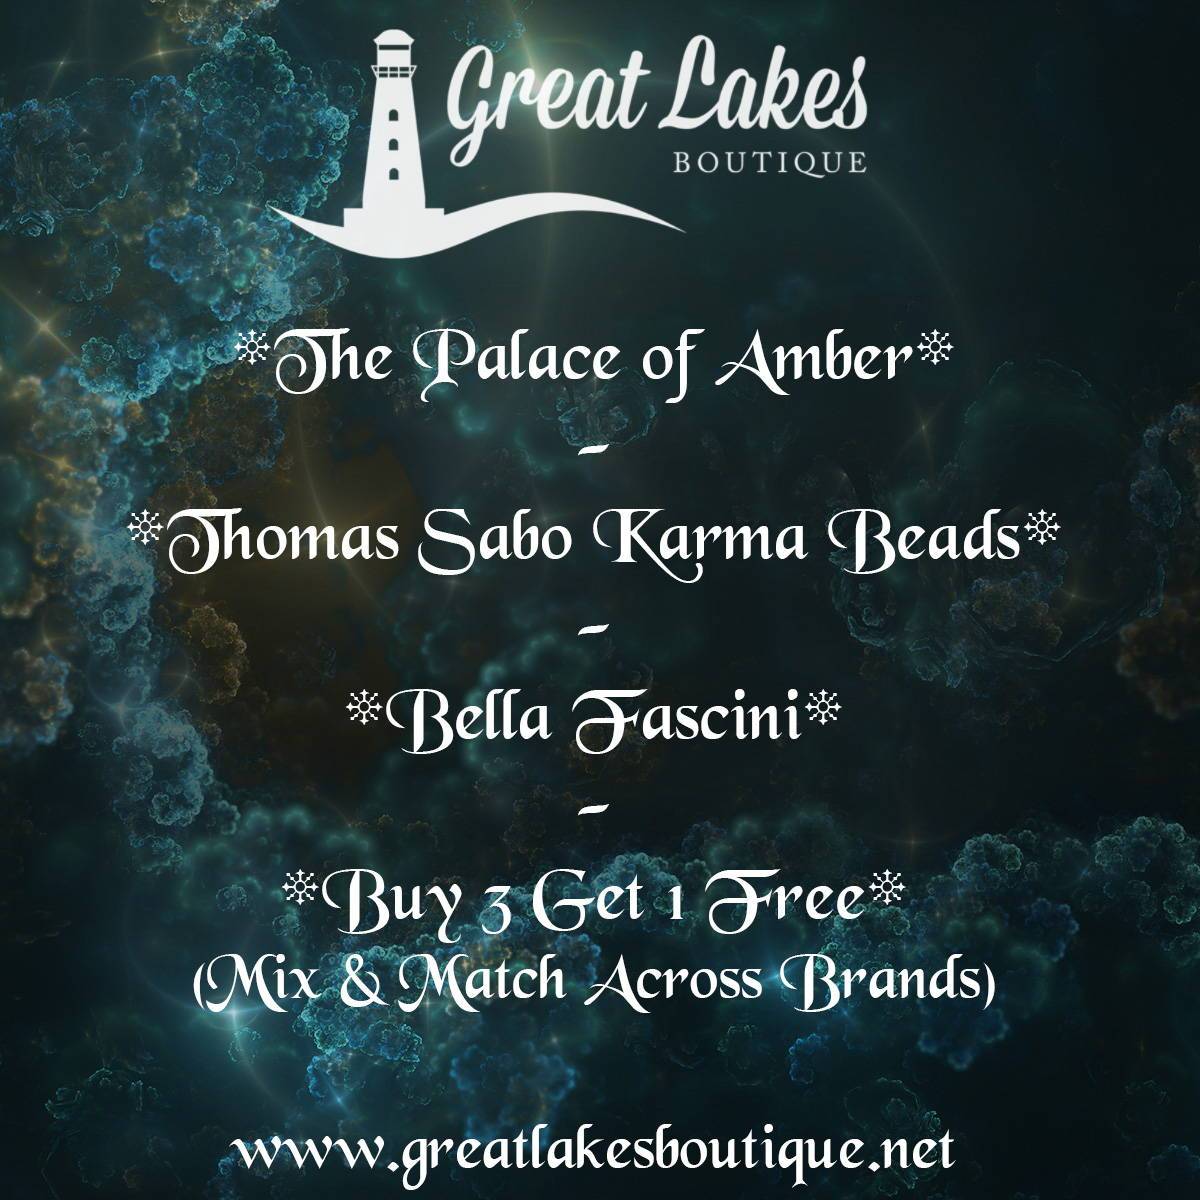 The Palace of Amber, Thomas Sabo Karma Beads & Bella Fascini Promotions for Bead Bash on the Lake